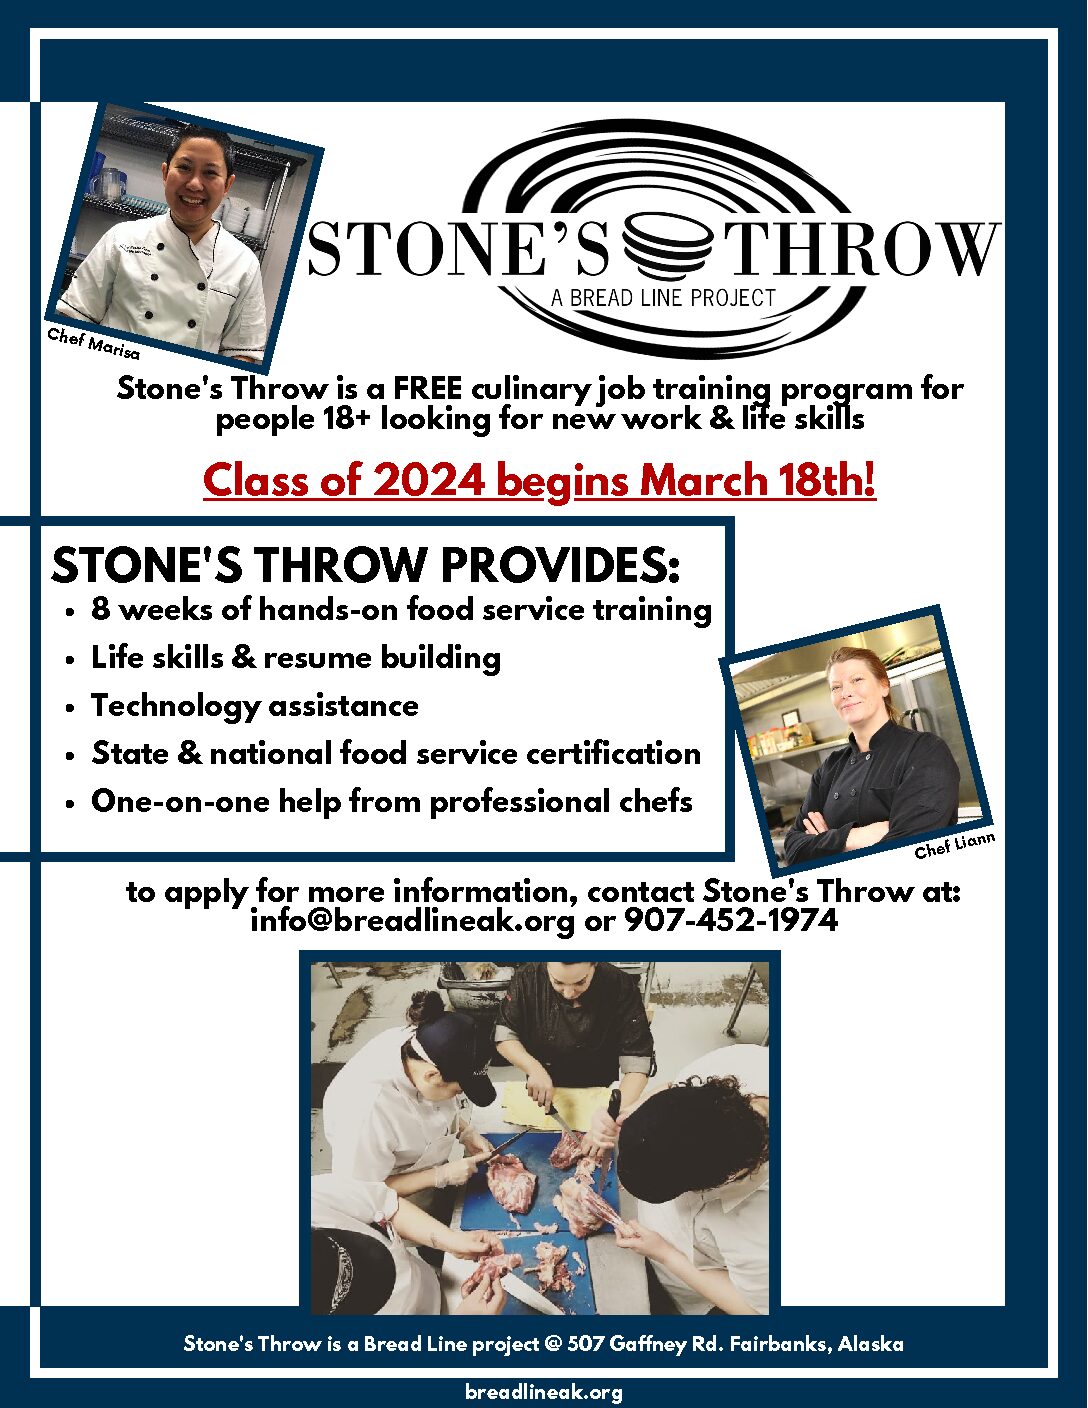 Stones Throw Culinary Job Training Program, Fairbanks, Alaska